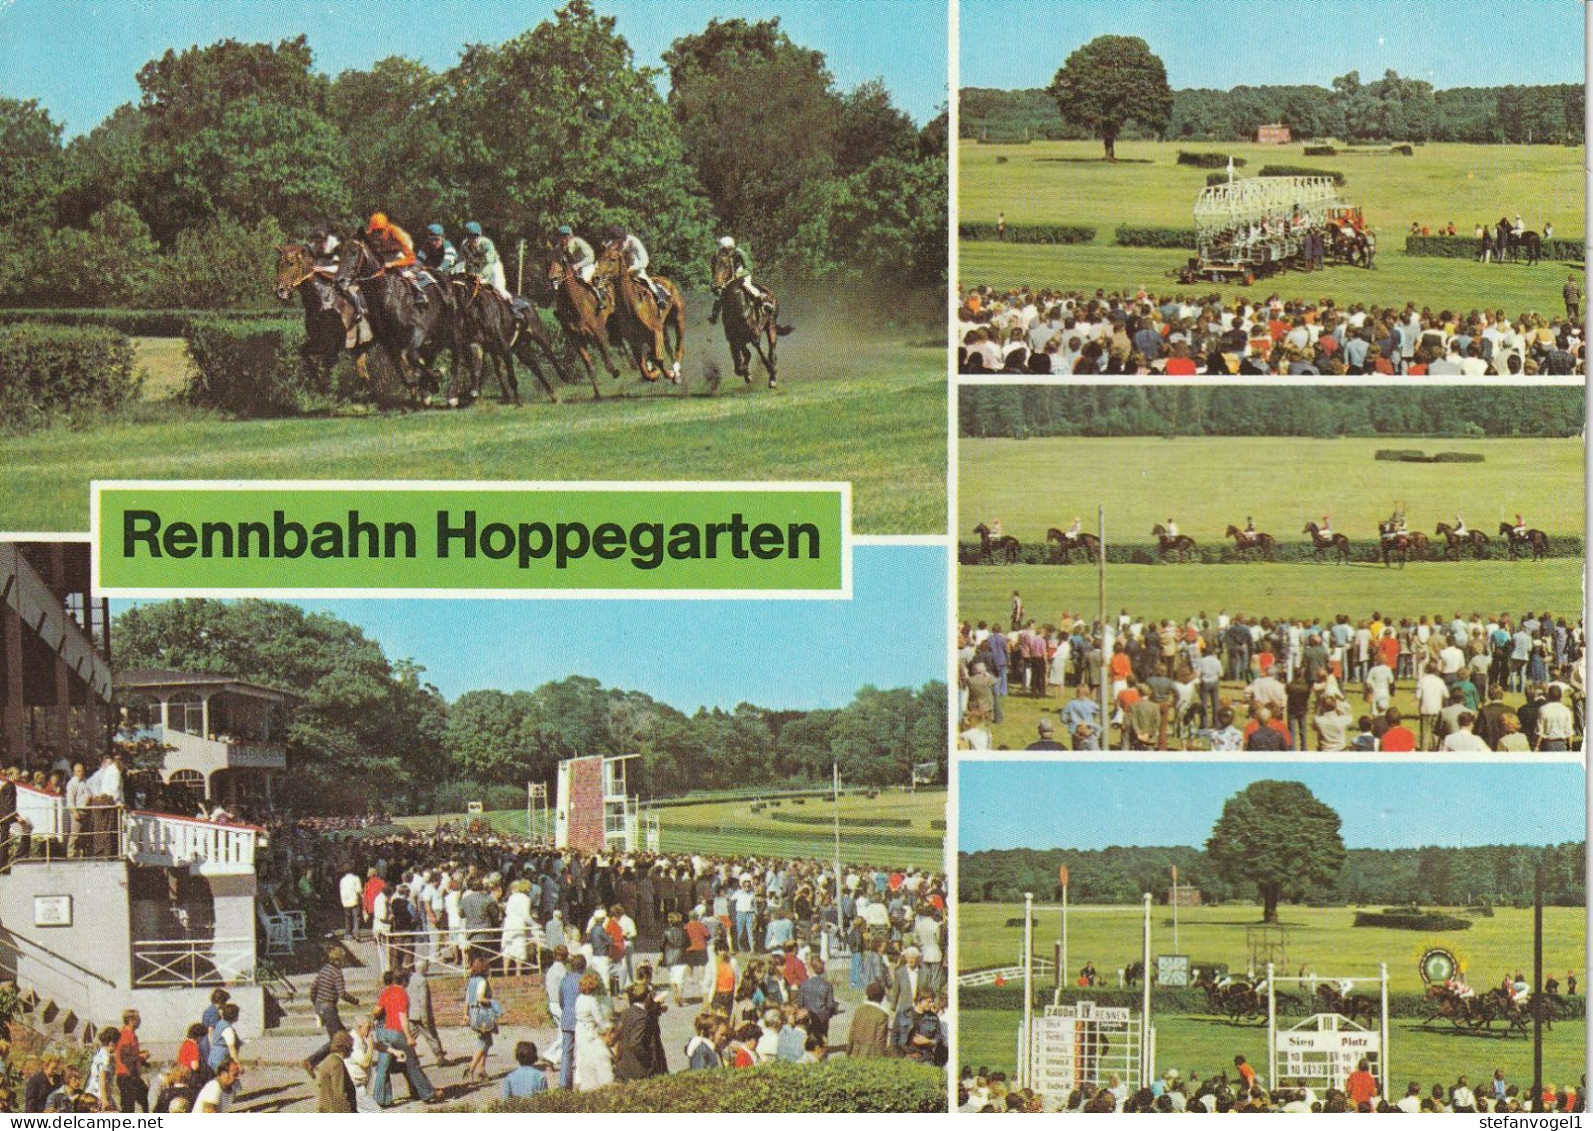 Rennbahn Hoppegarten 1984 - Horse Show